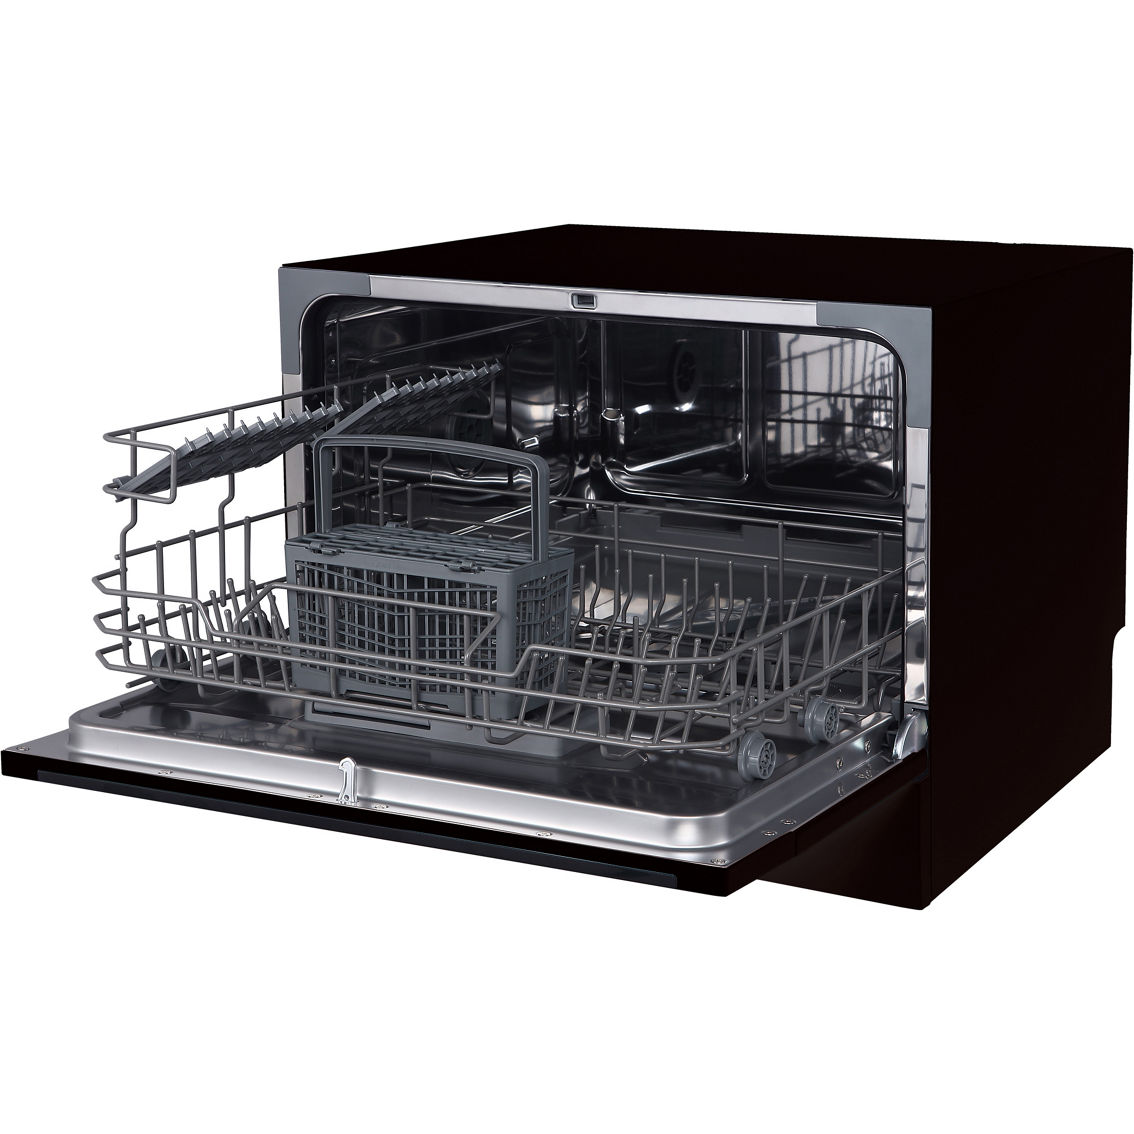 Farberware 6 pc. Countertop Dishwasher - Image 2 of 2